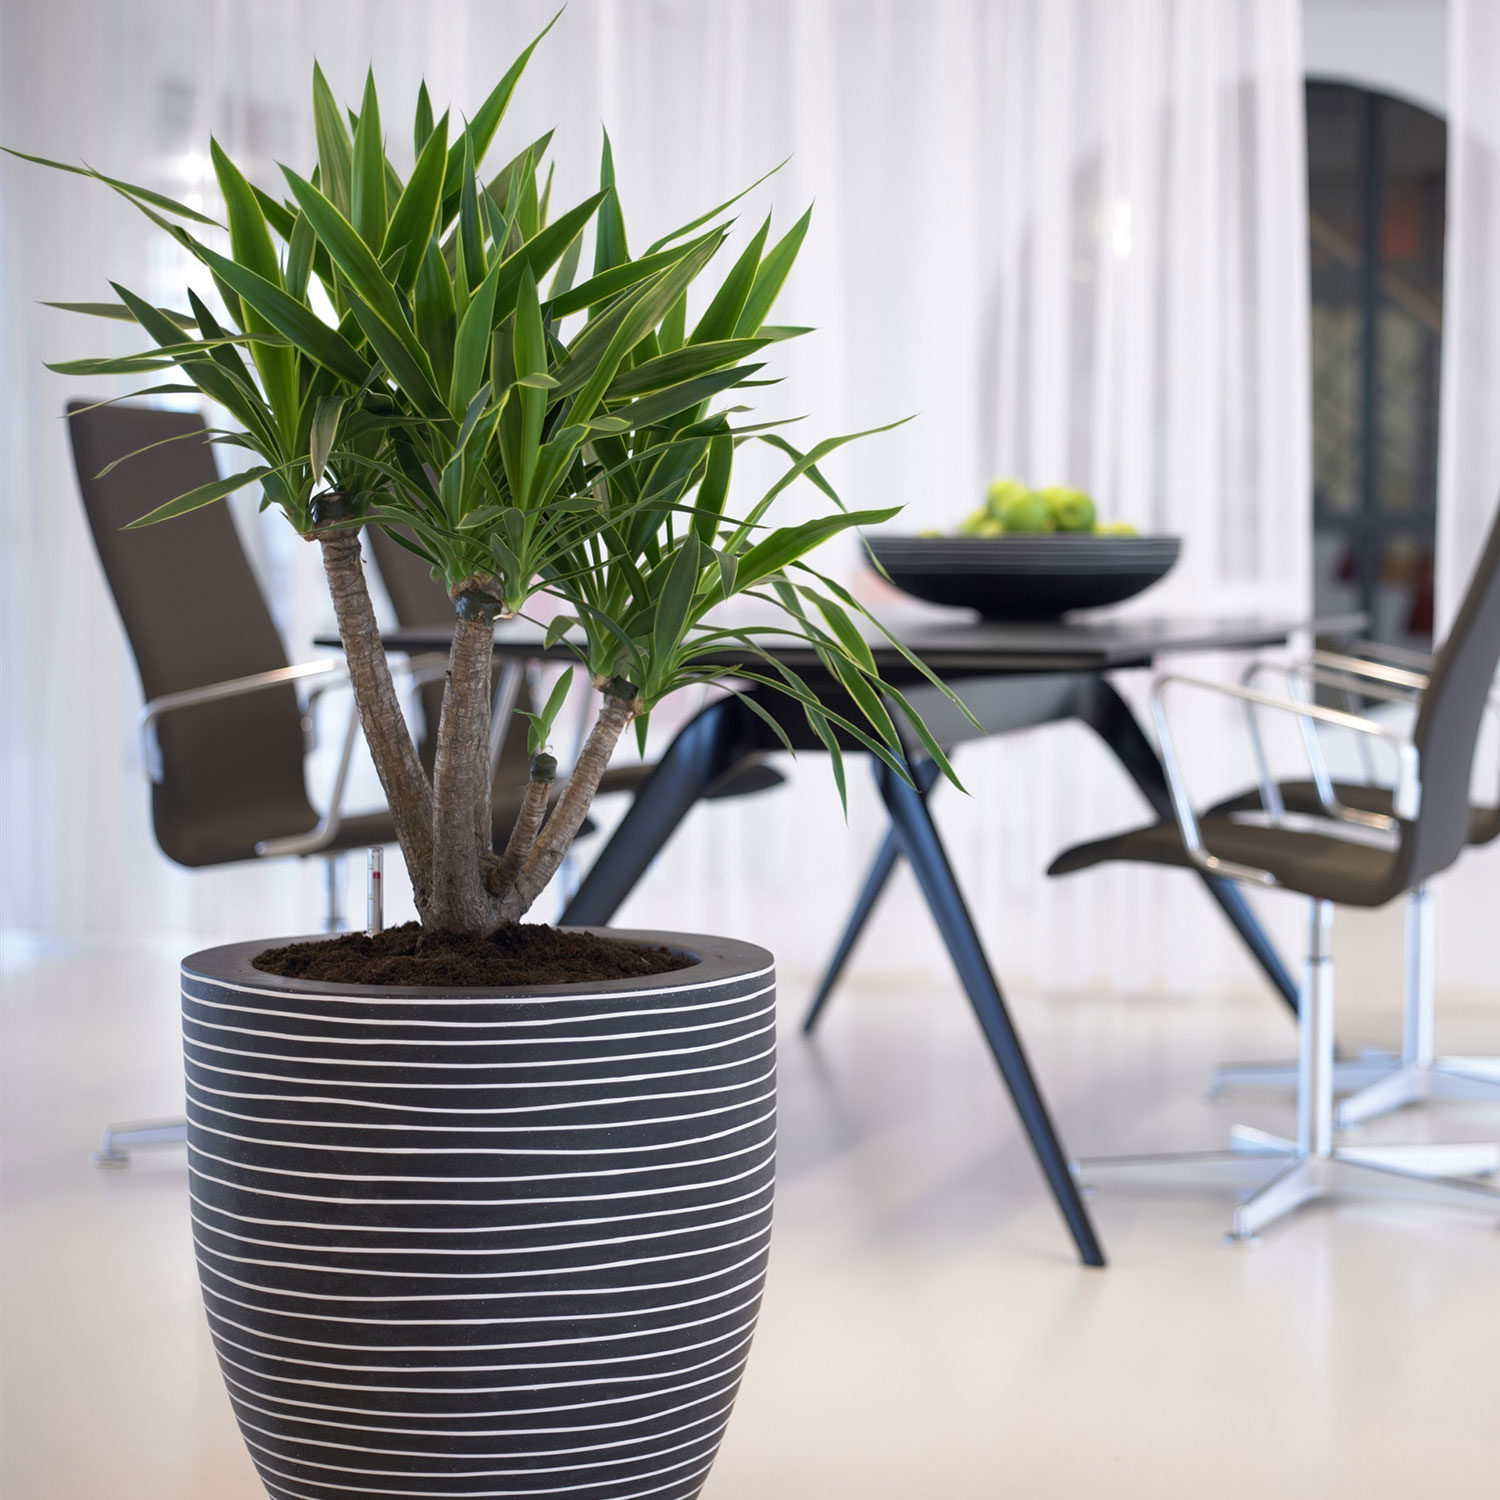 Interior design plant pots and flower boxes